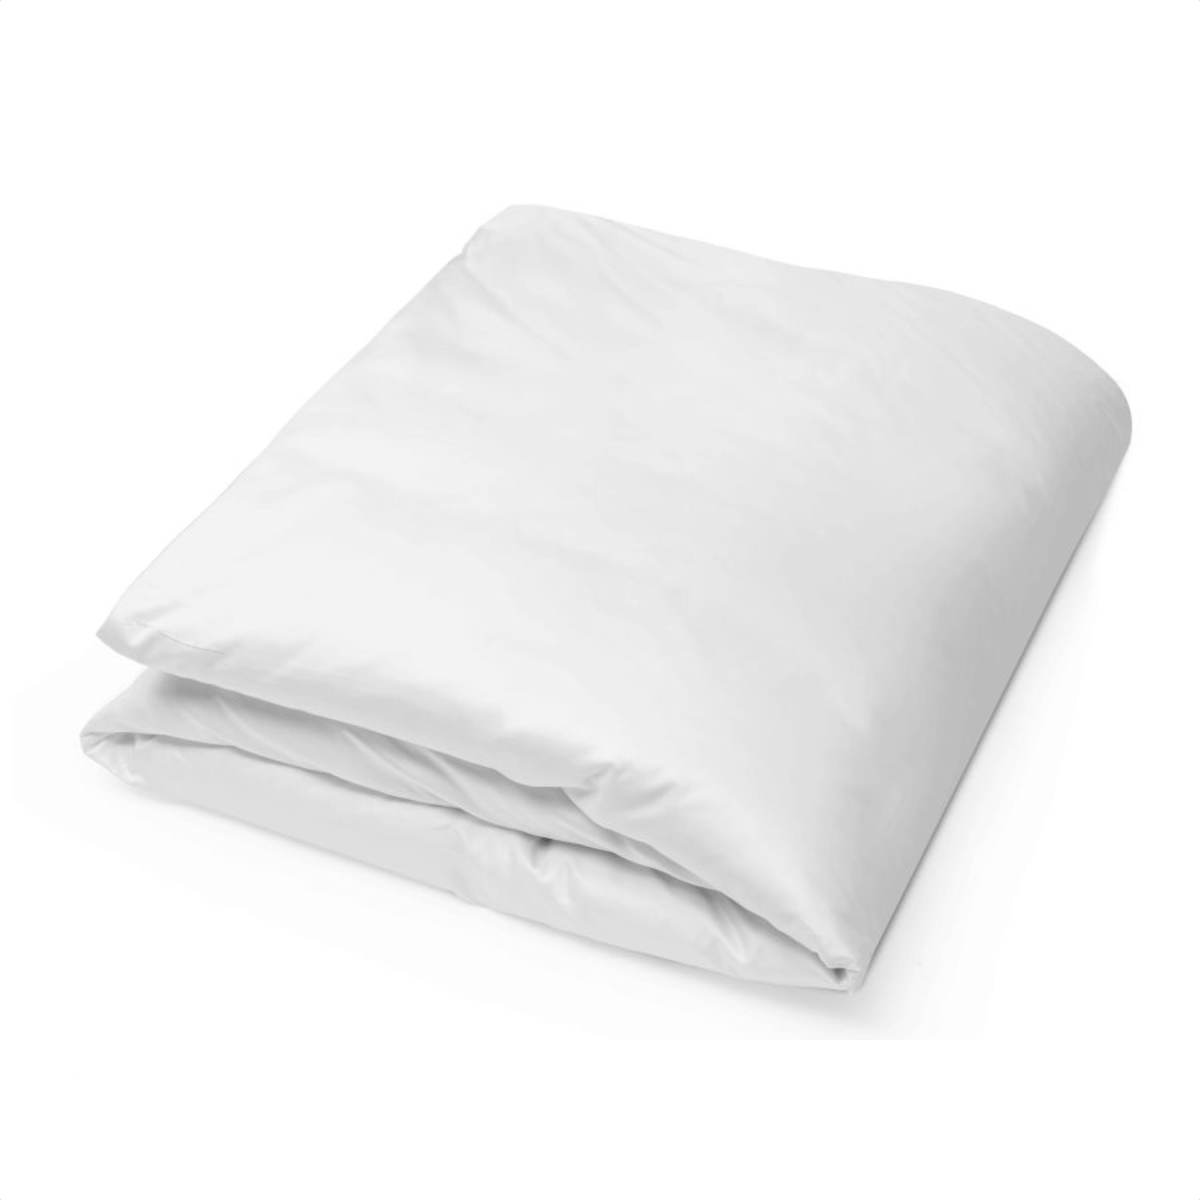 Folded Duvet Cover of Signoria Gemma Bedding in White Color